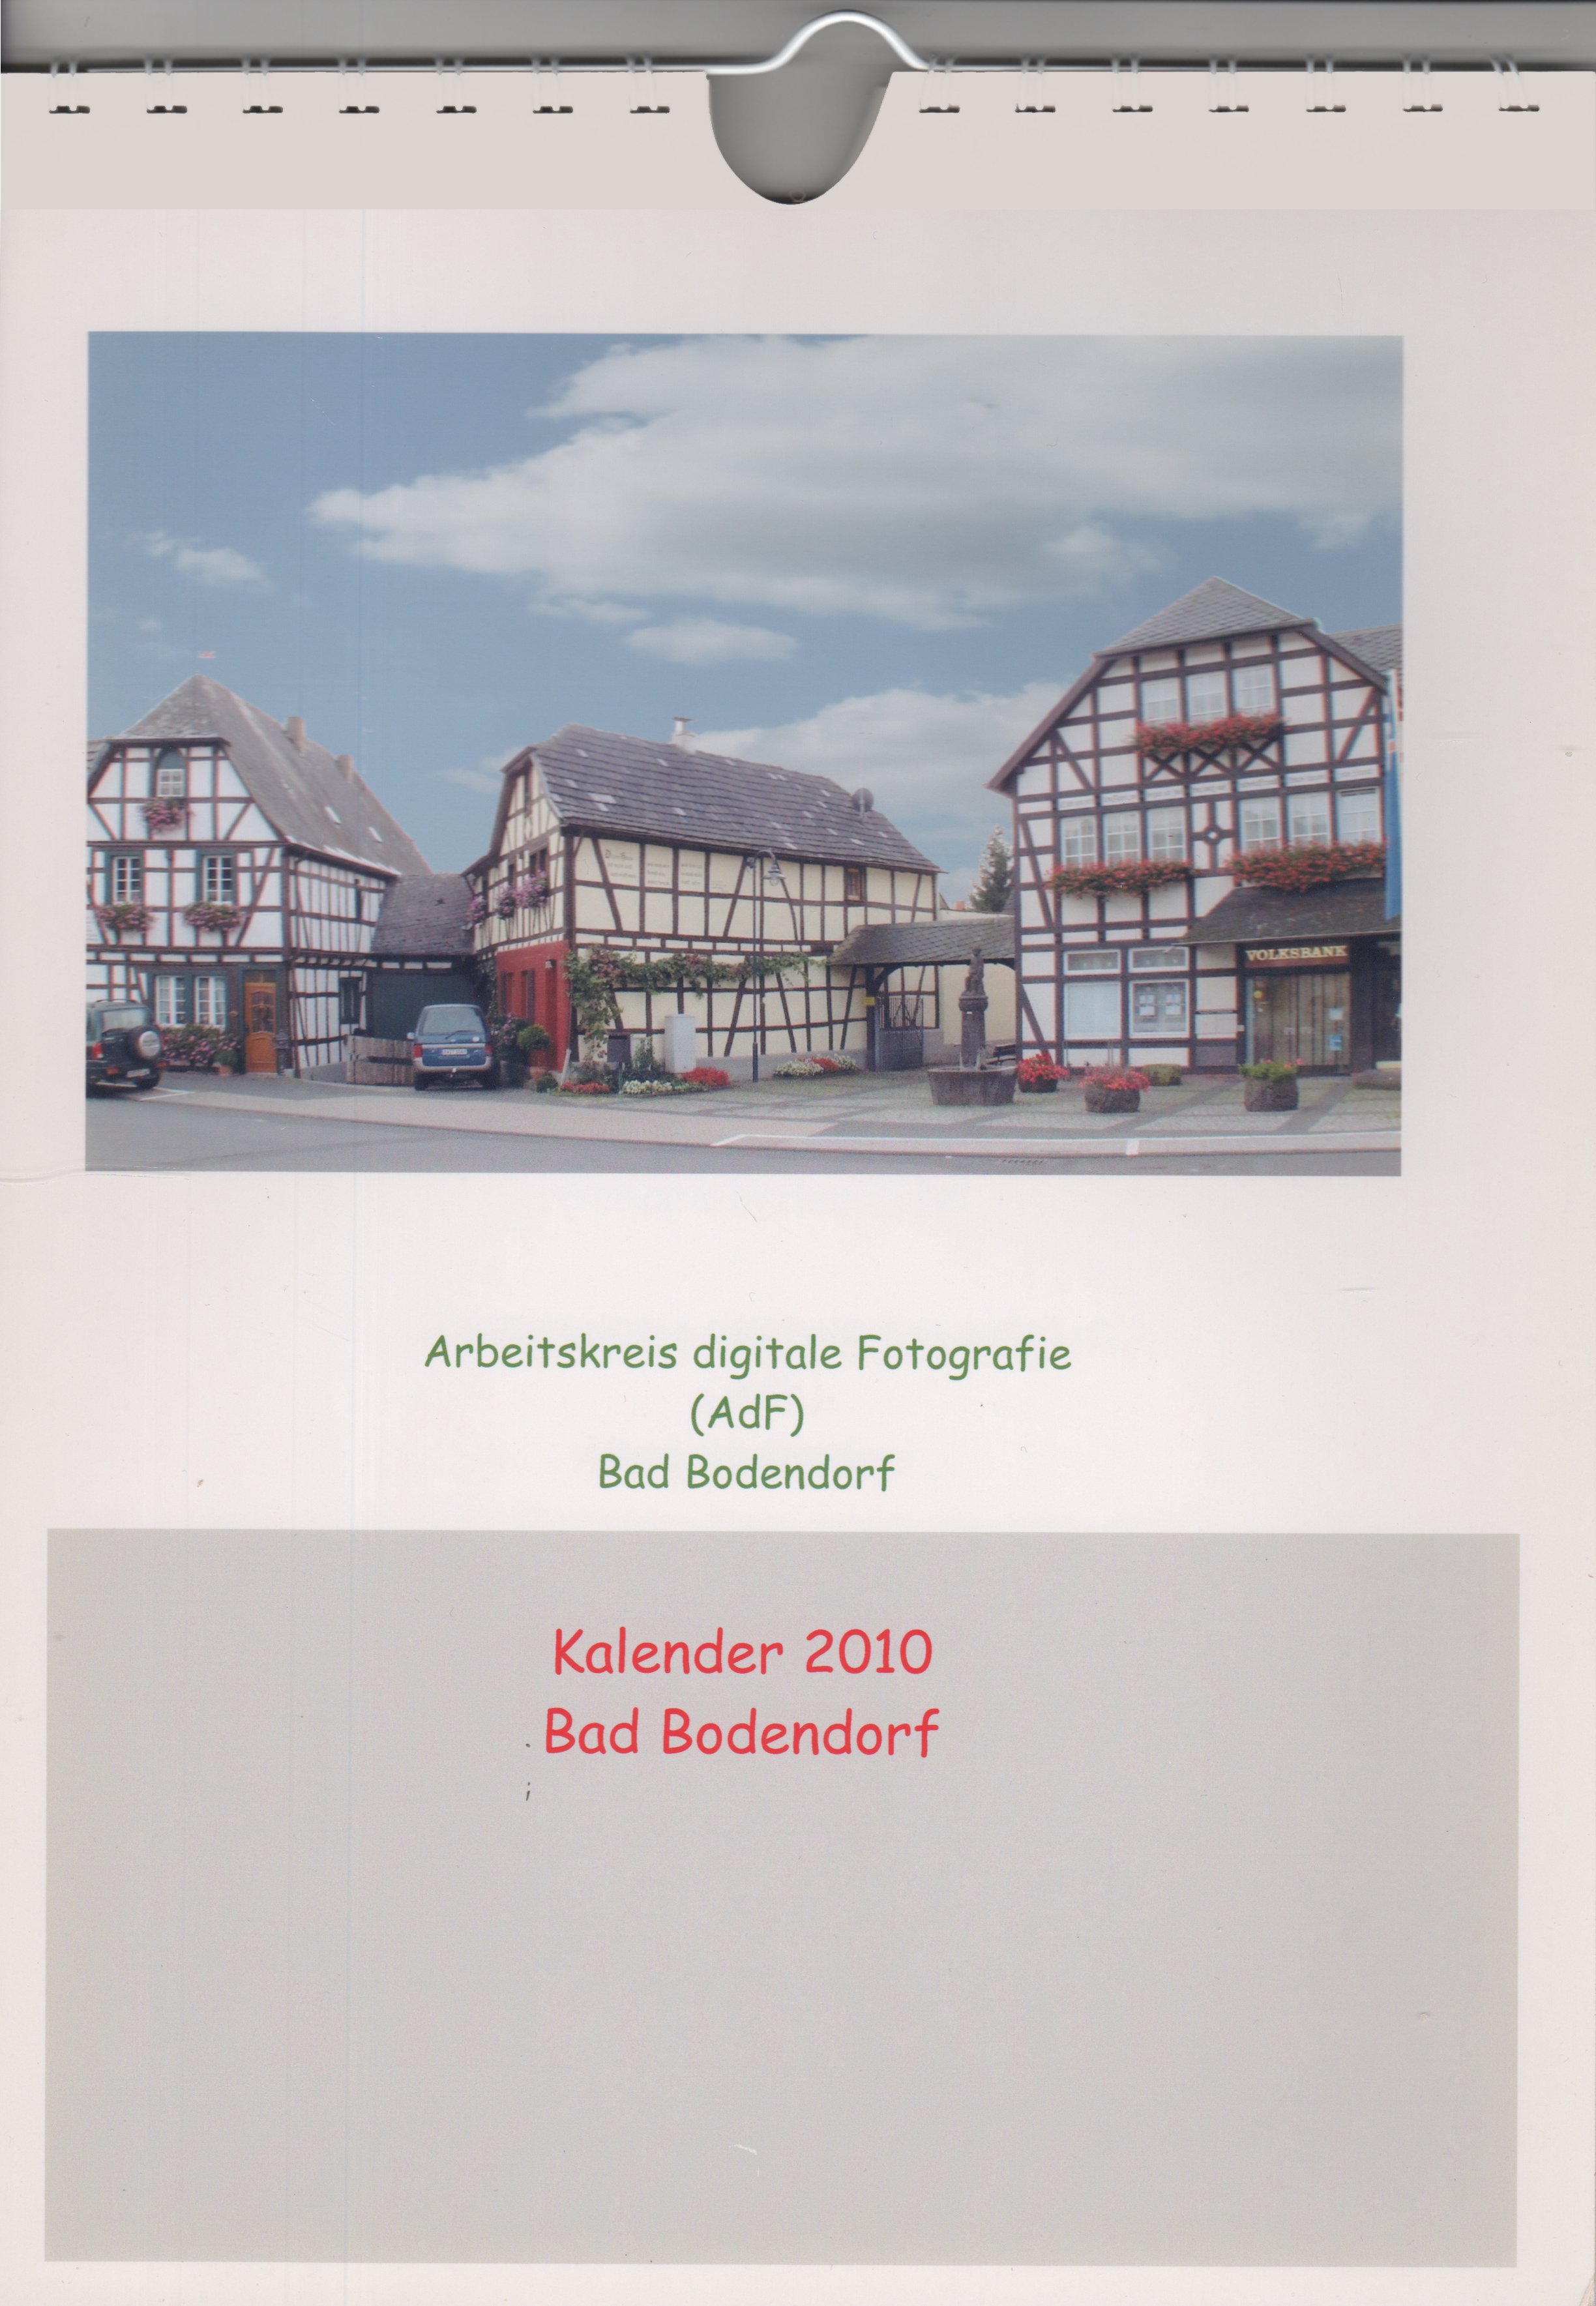 Kalender 2010 Bad Bodendorf (Arbeitskreis digitale Fotografie (AdF) CC BY-NC-SA)